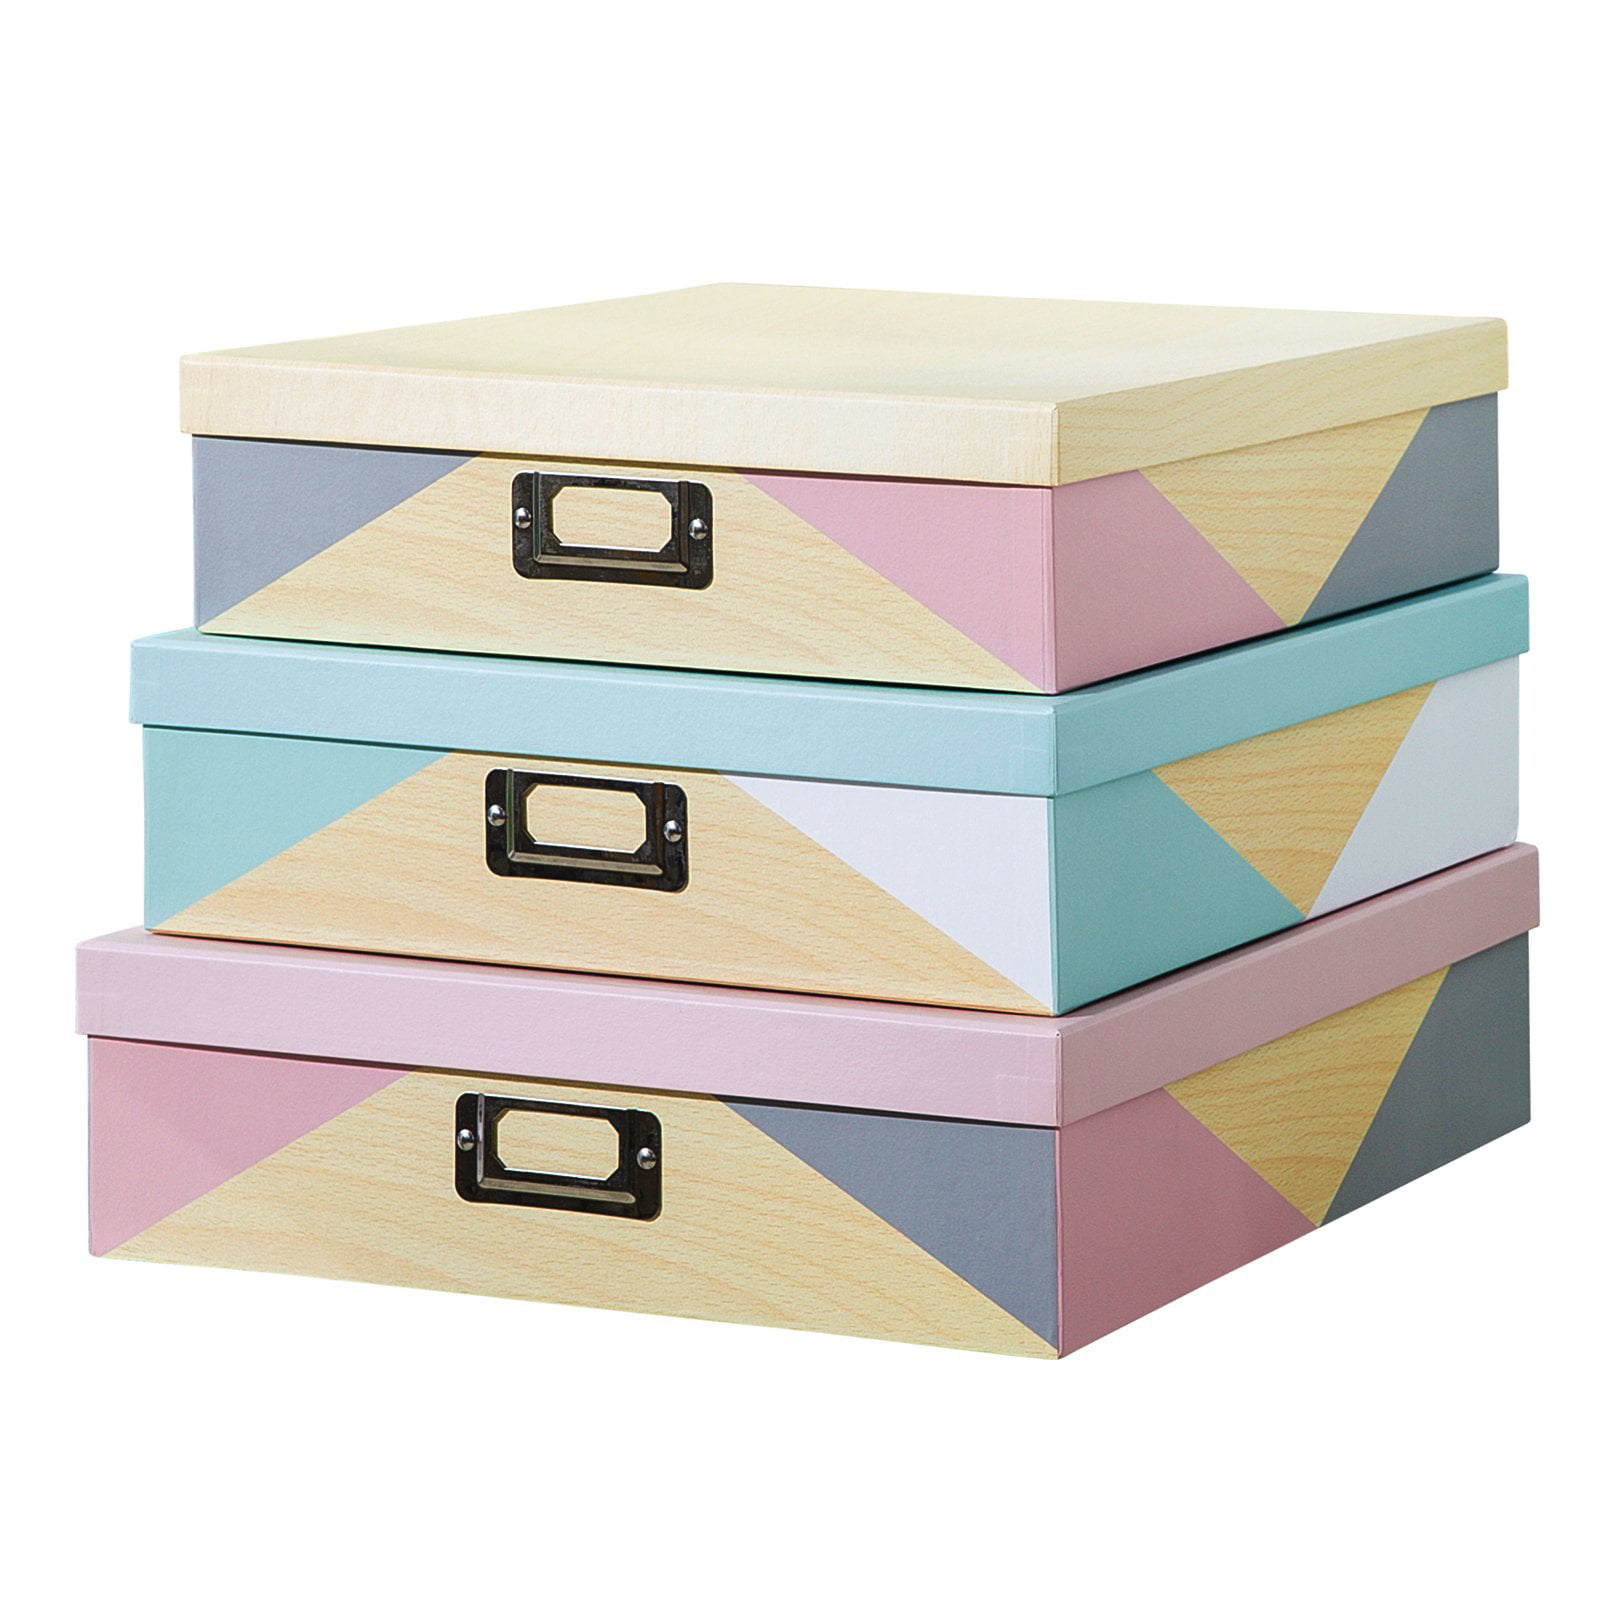 SLPR Decorative Storage Cardboard Boxes with Lids (Set of 3, Nordic